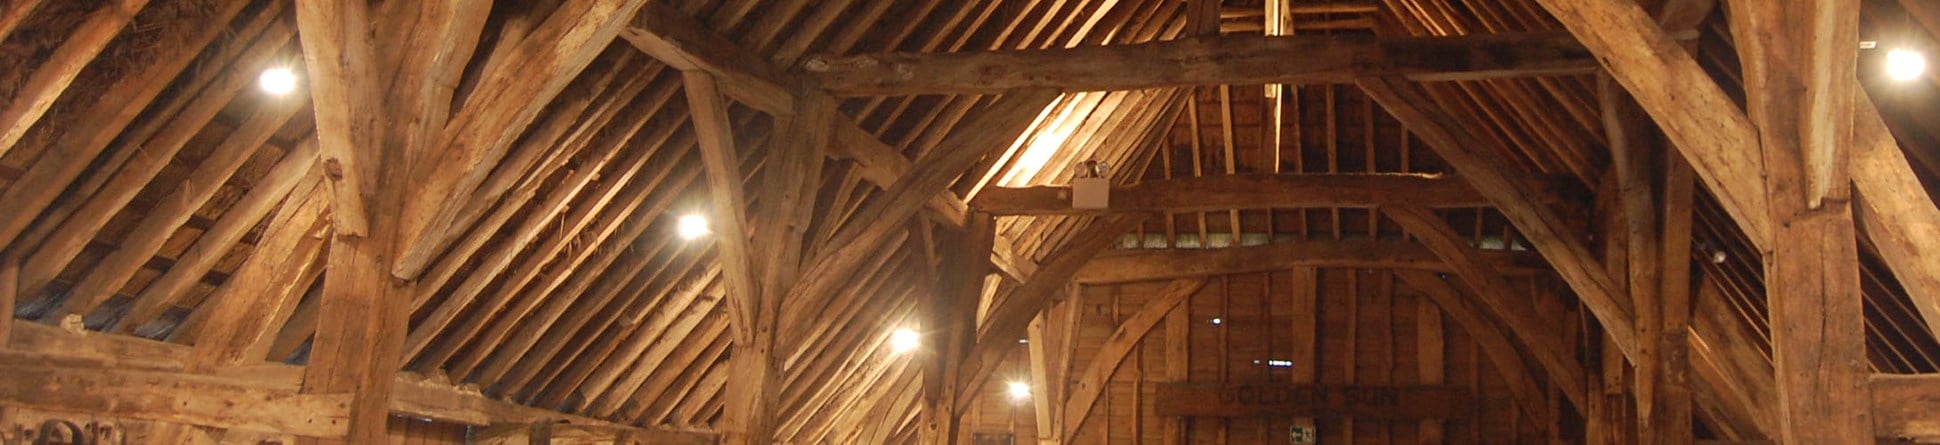 Interior of Harmondsworth Barn, Hillingdon